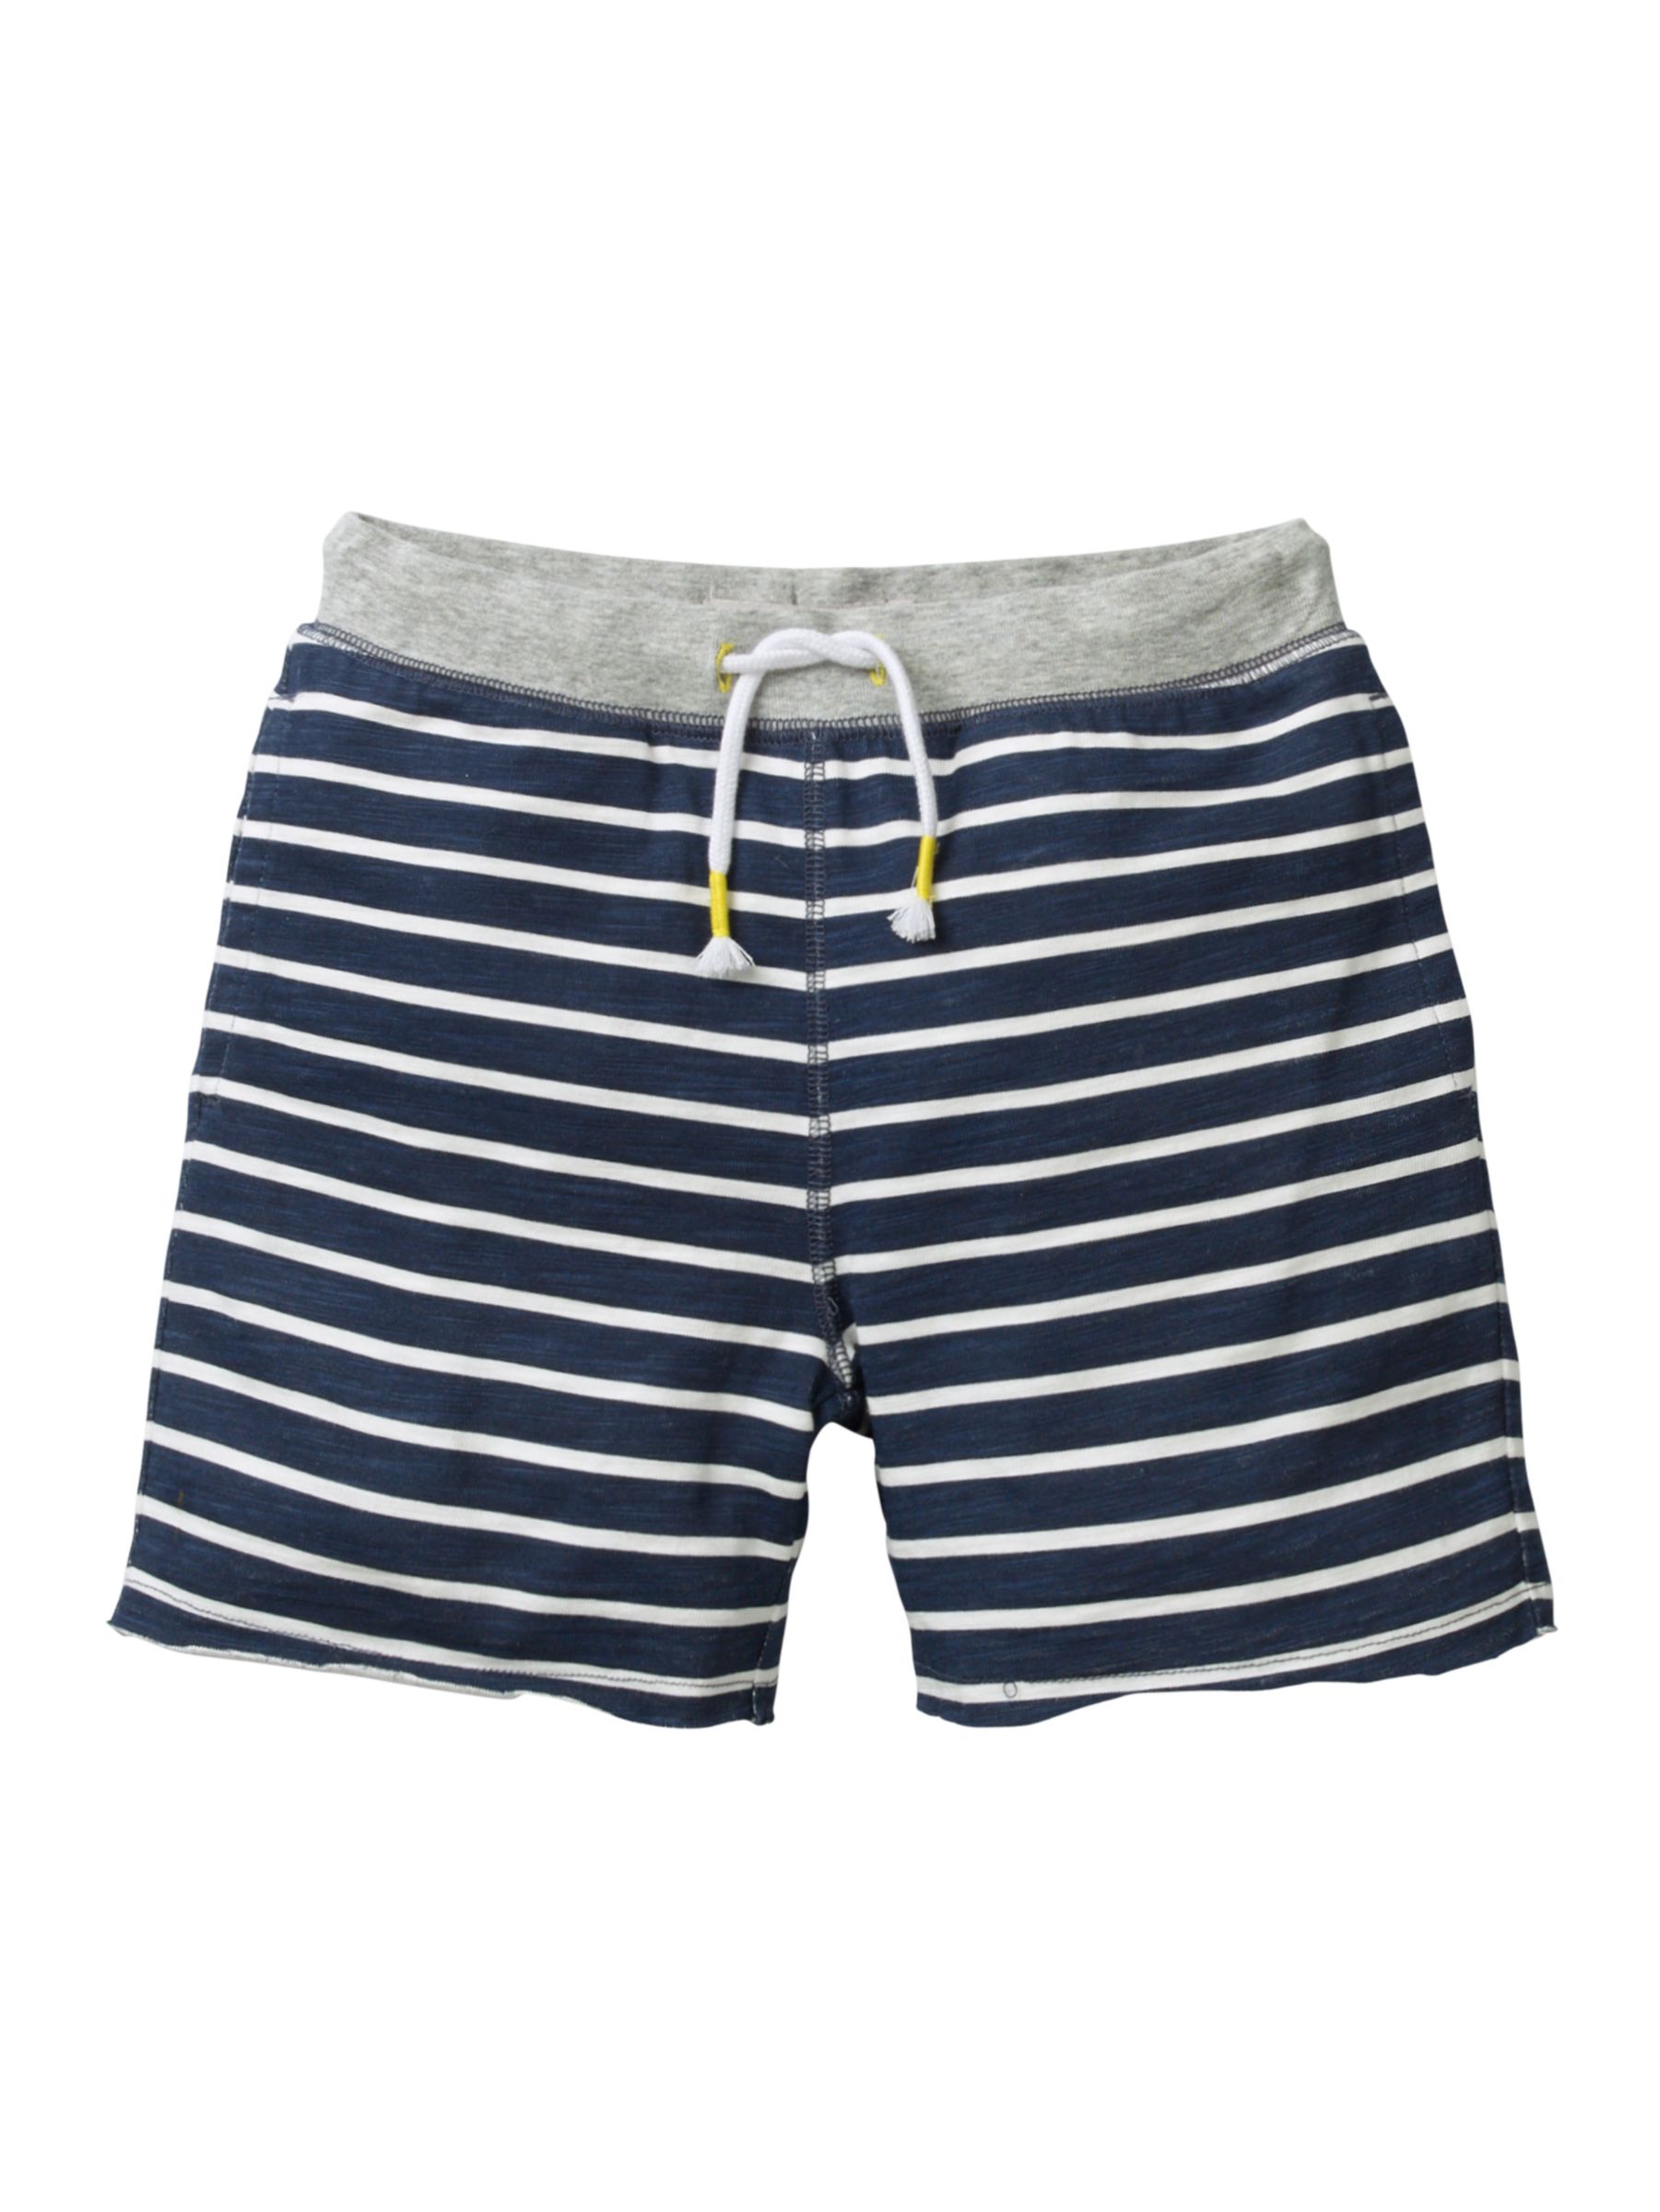 Mini Boden Boys' Slub Jersey Stripe Shorts, Blue/White